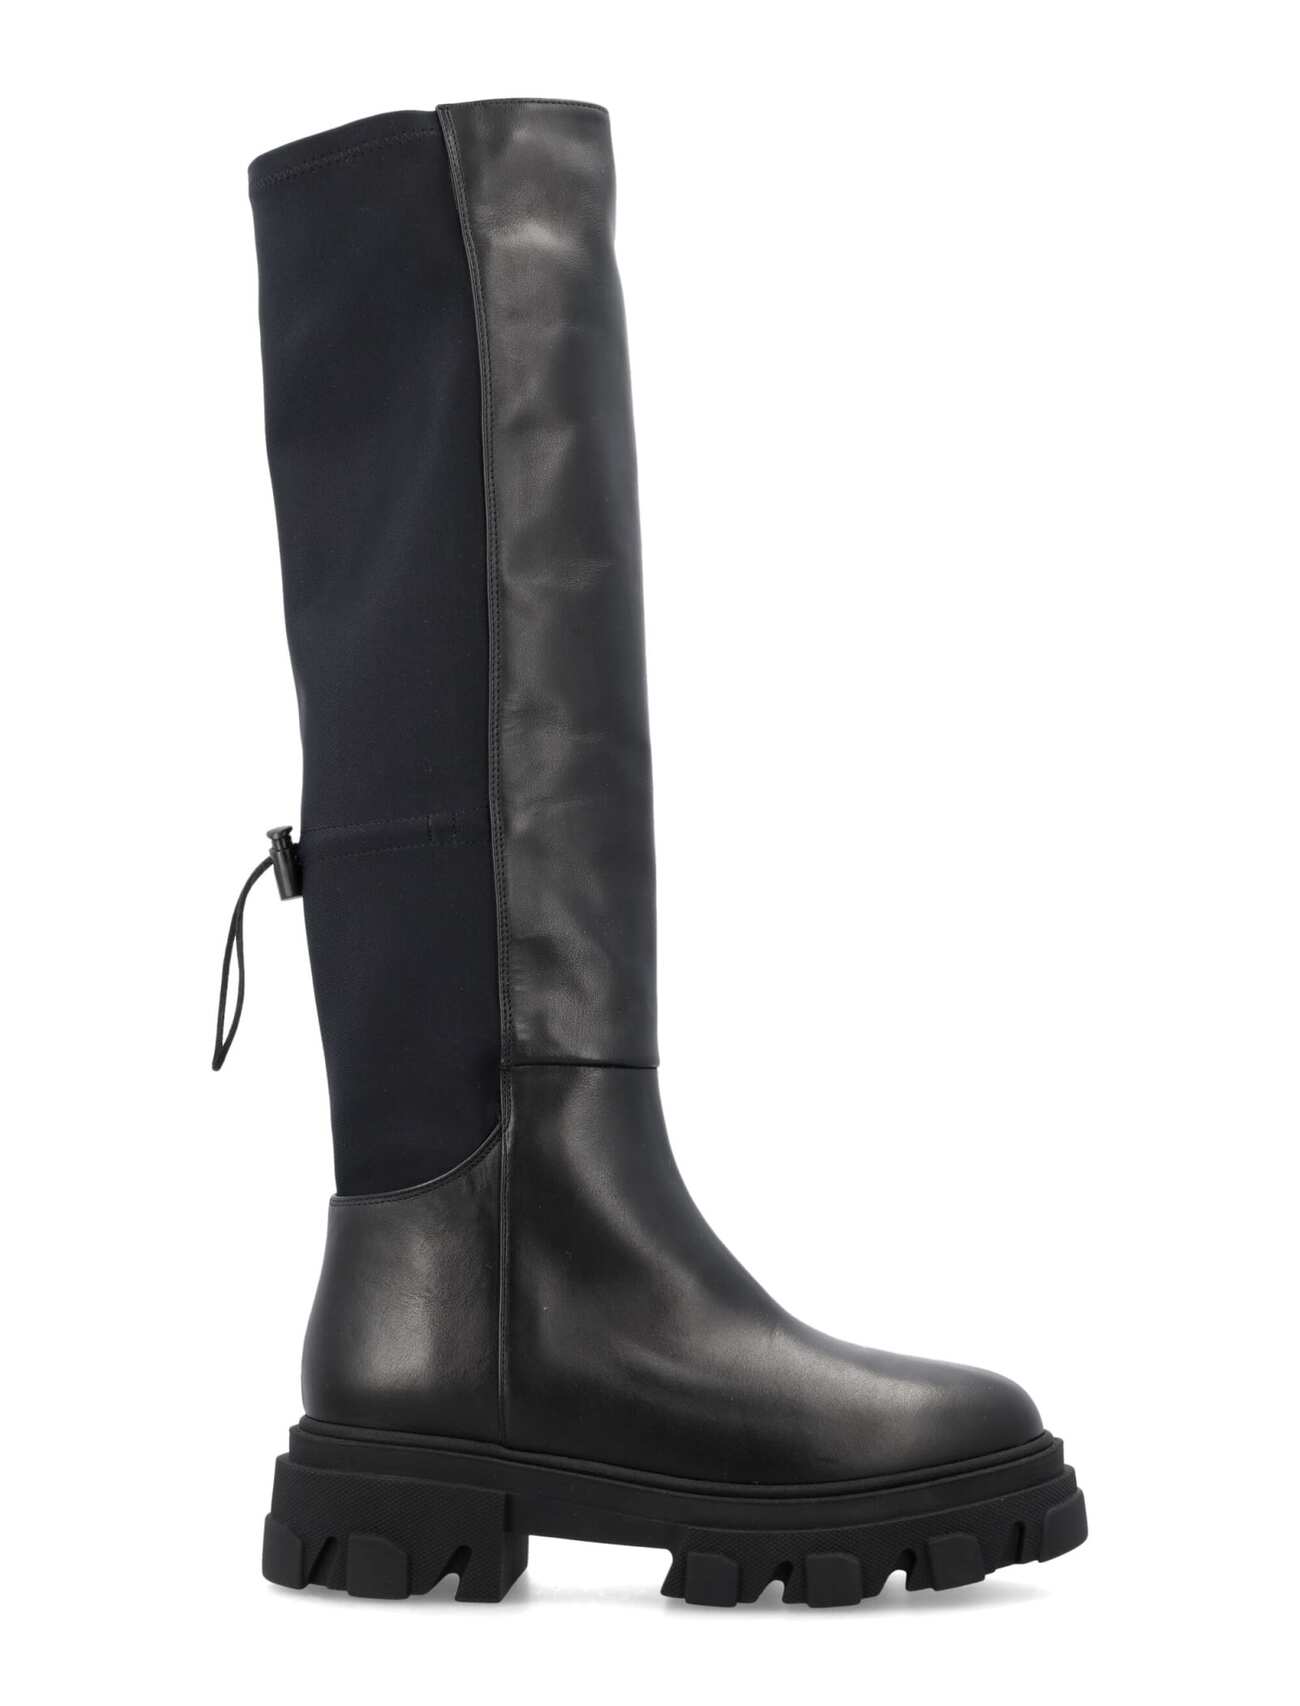 GIA BORGHINI Gia 12 Boots in black